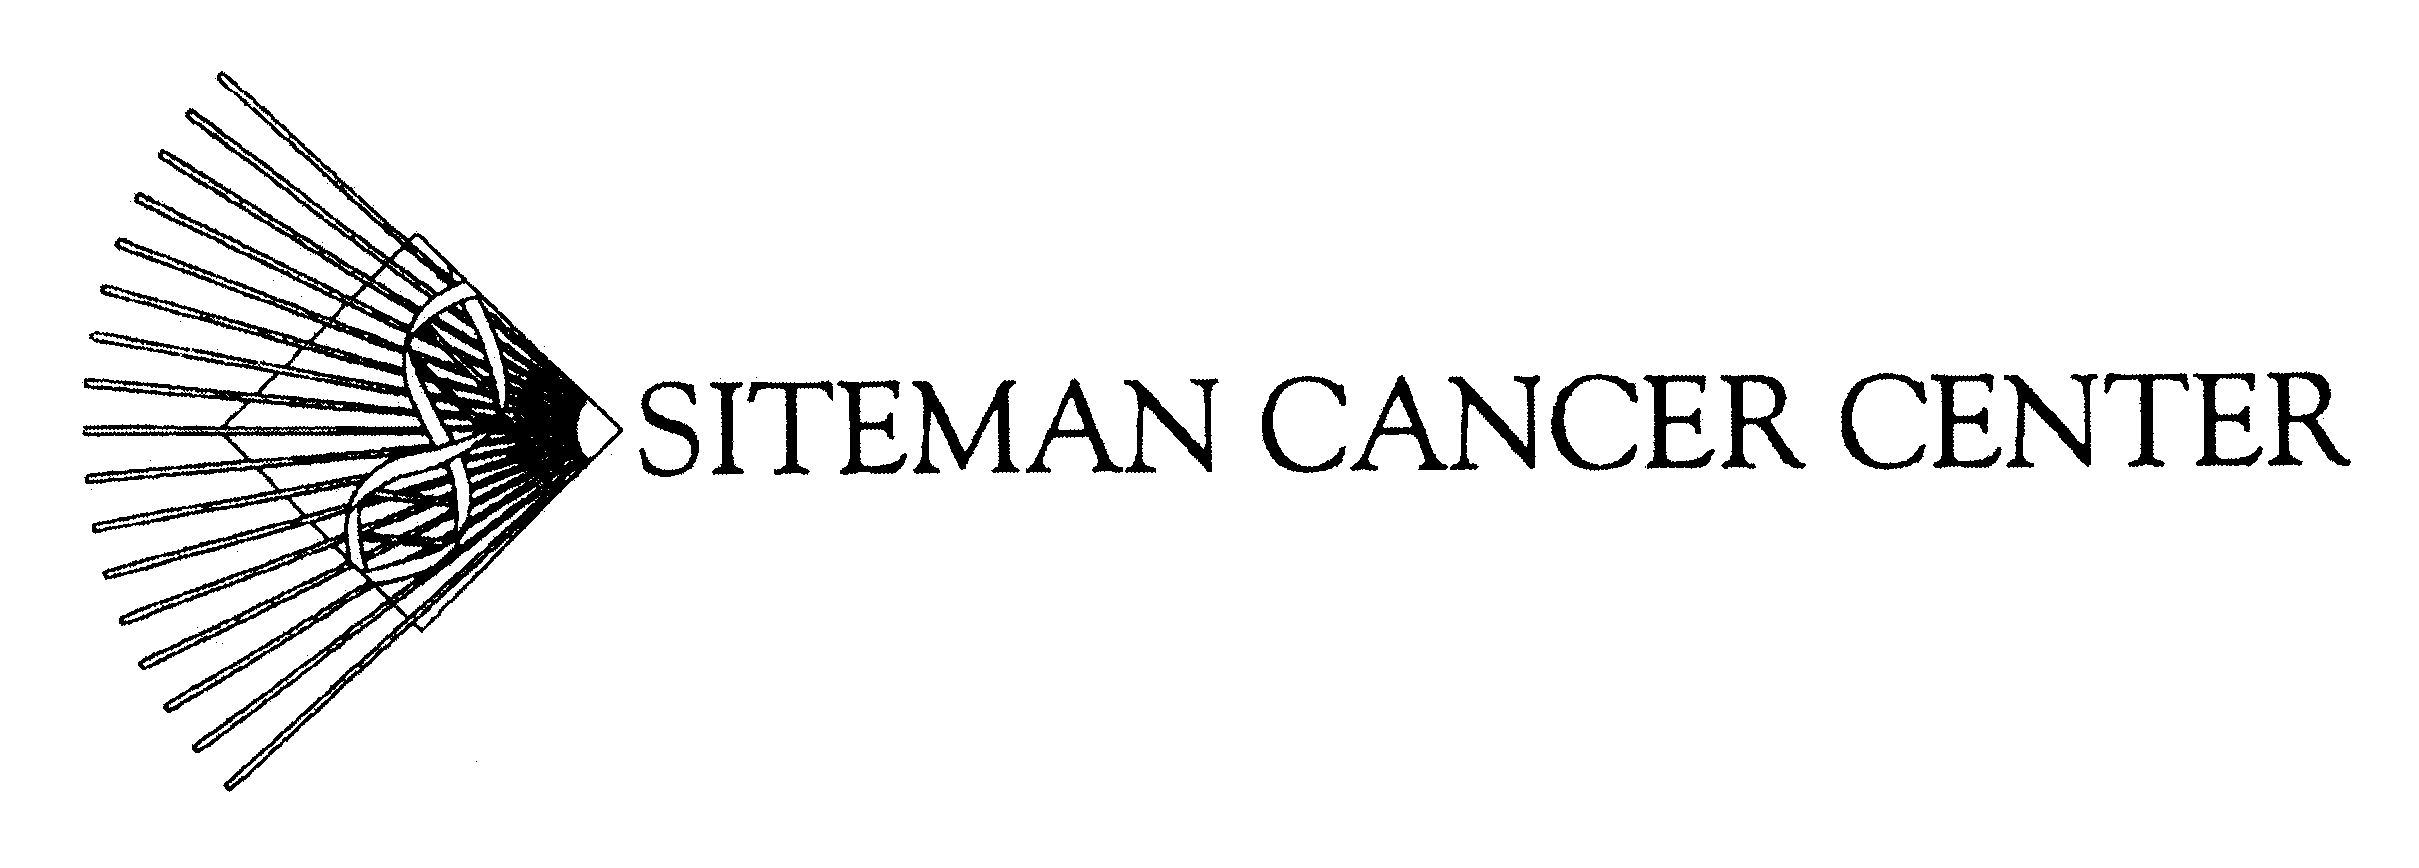  SITEMAN CANCER CENTER